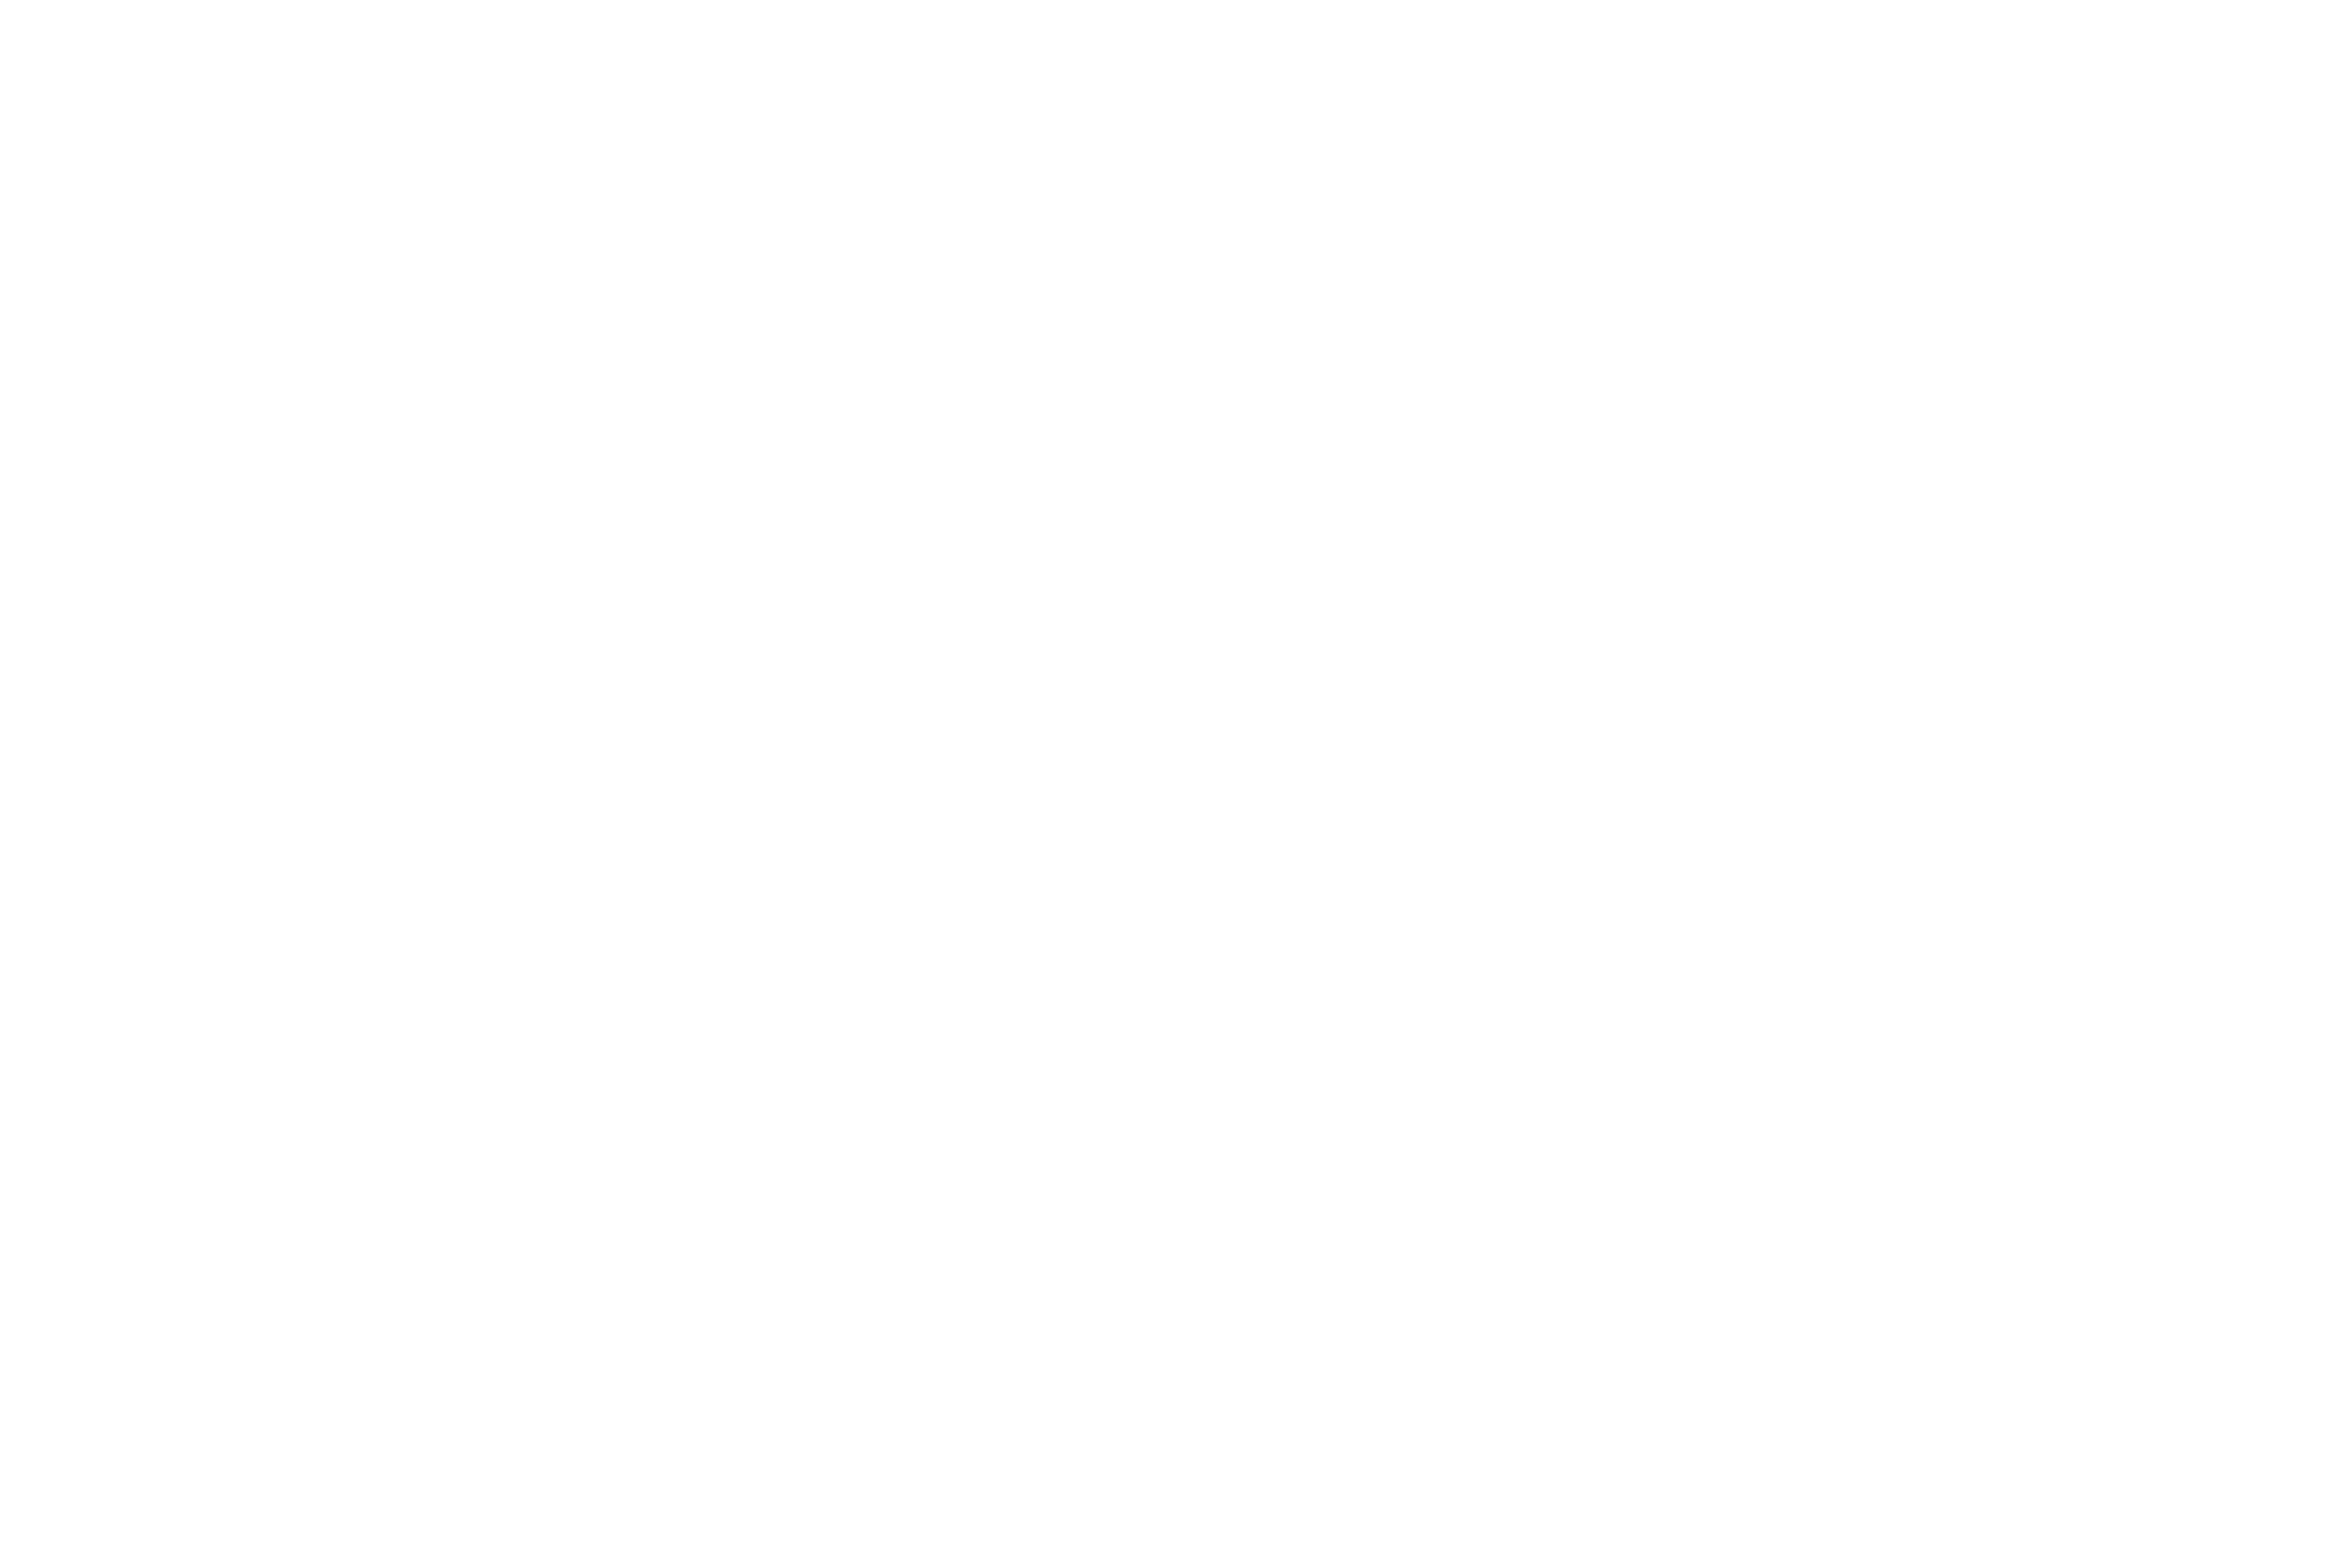 Multiply Chicago